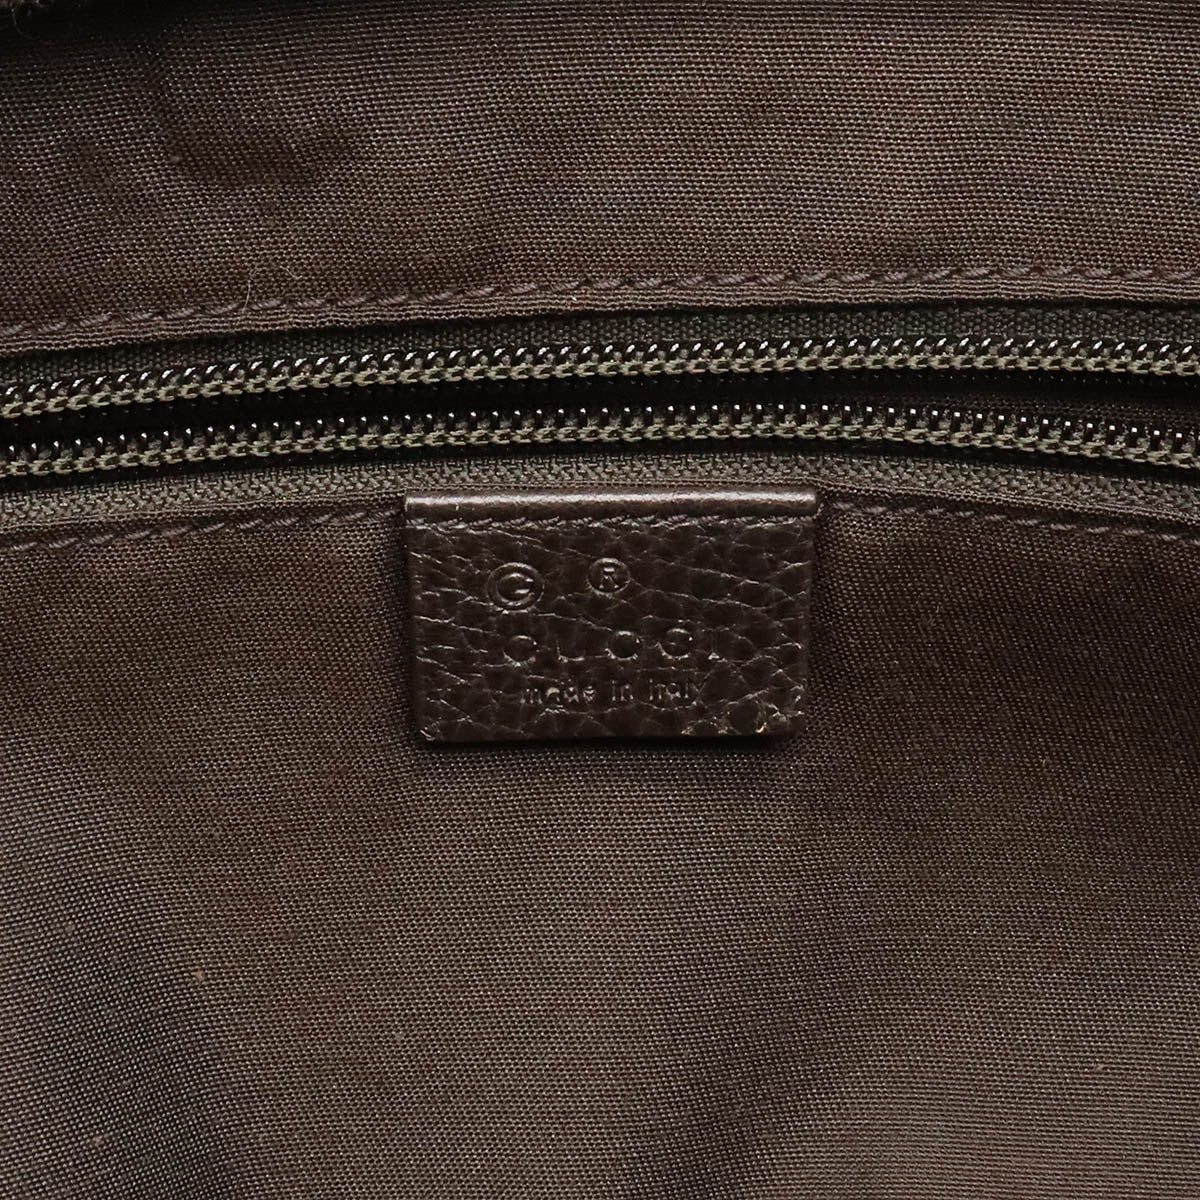 Gucci Interlocking Shoulder Bag (Outlet) Leather Small - ShopStyle